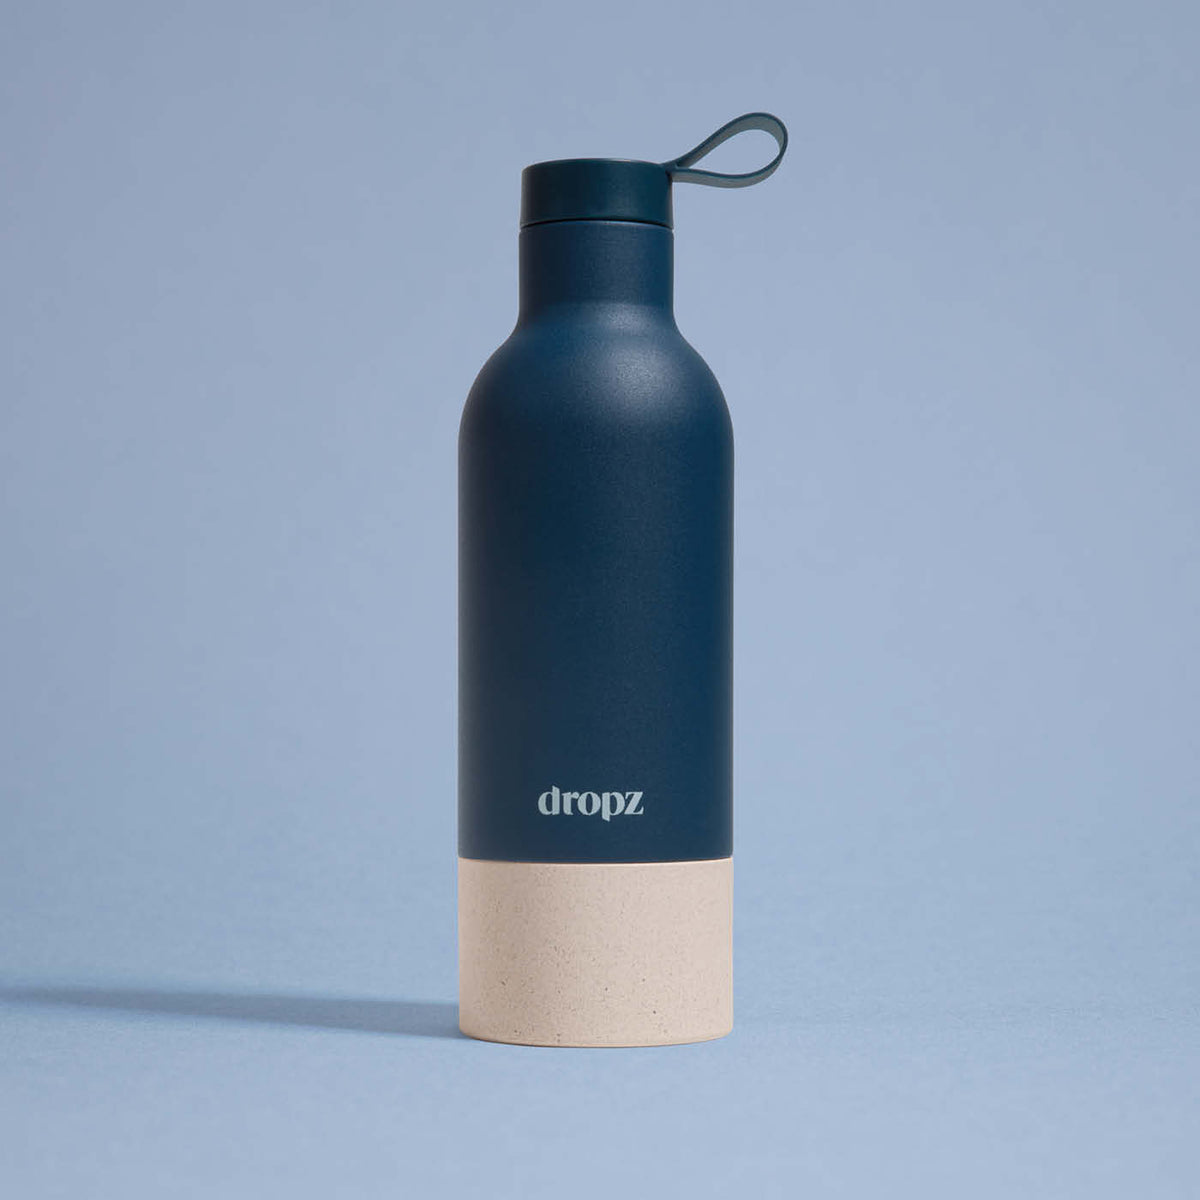 dropz Bottle blue - 0.5L with storage compartment